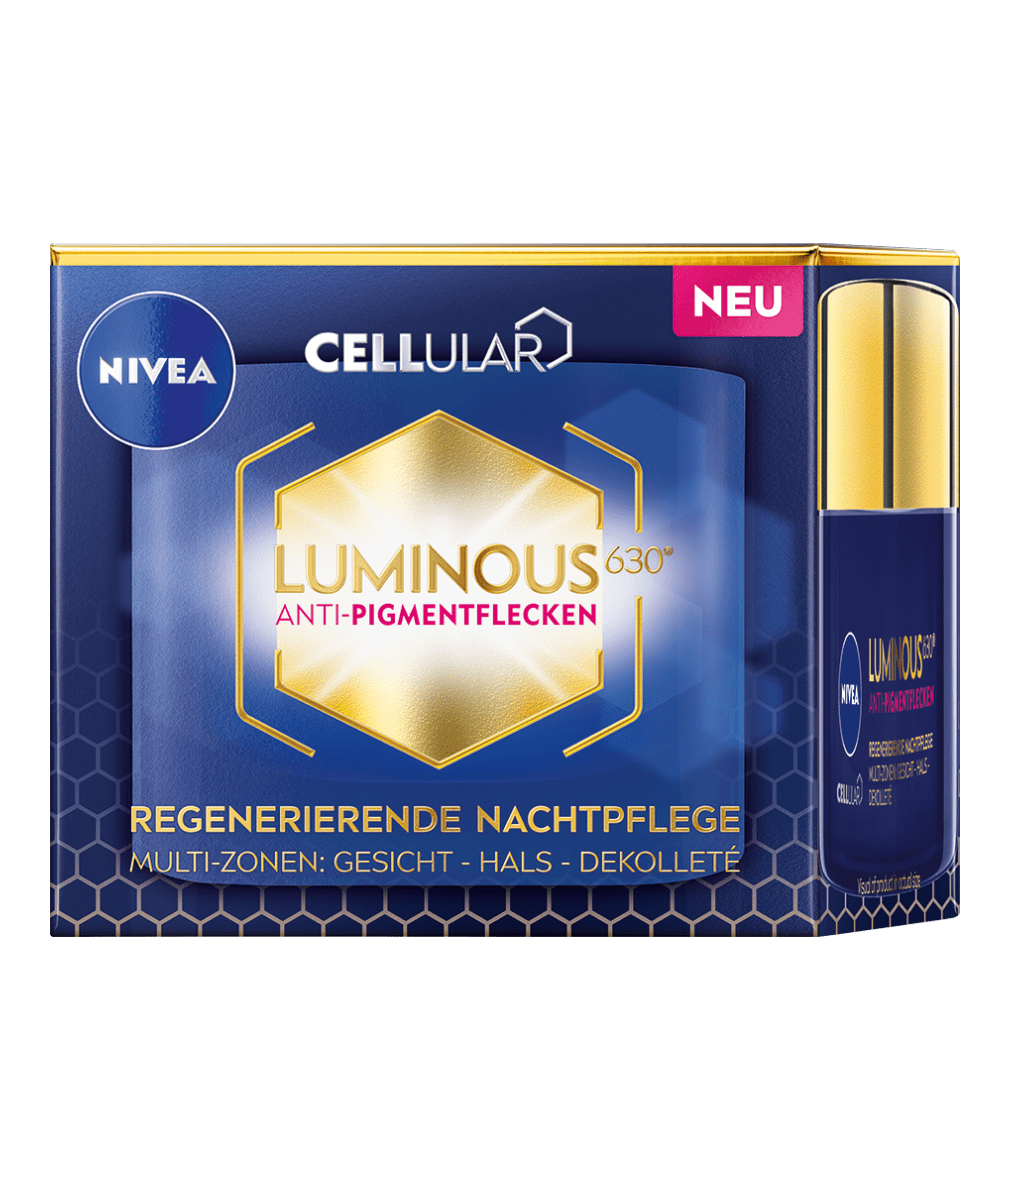 NIVEA Cellular Luminous630 Regenerierende Nachtpflege